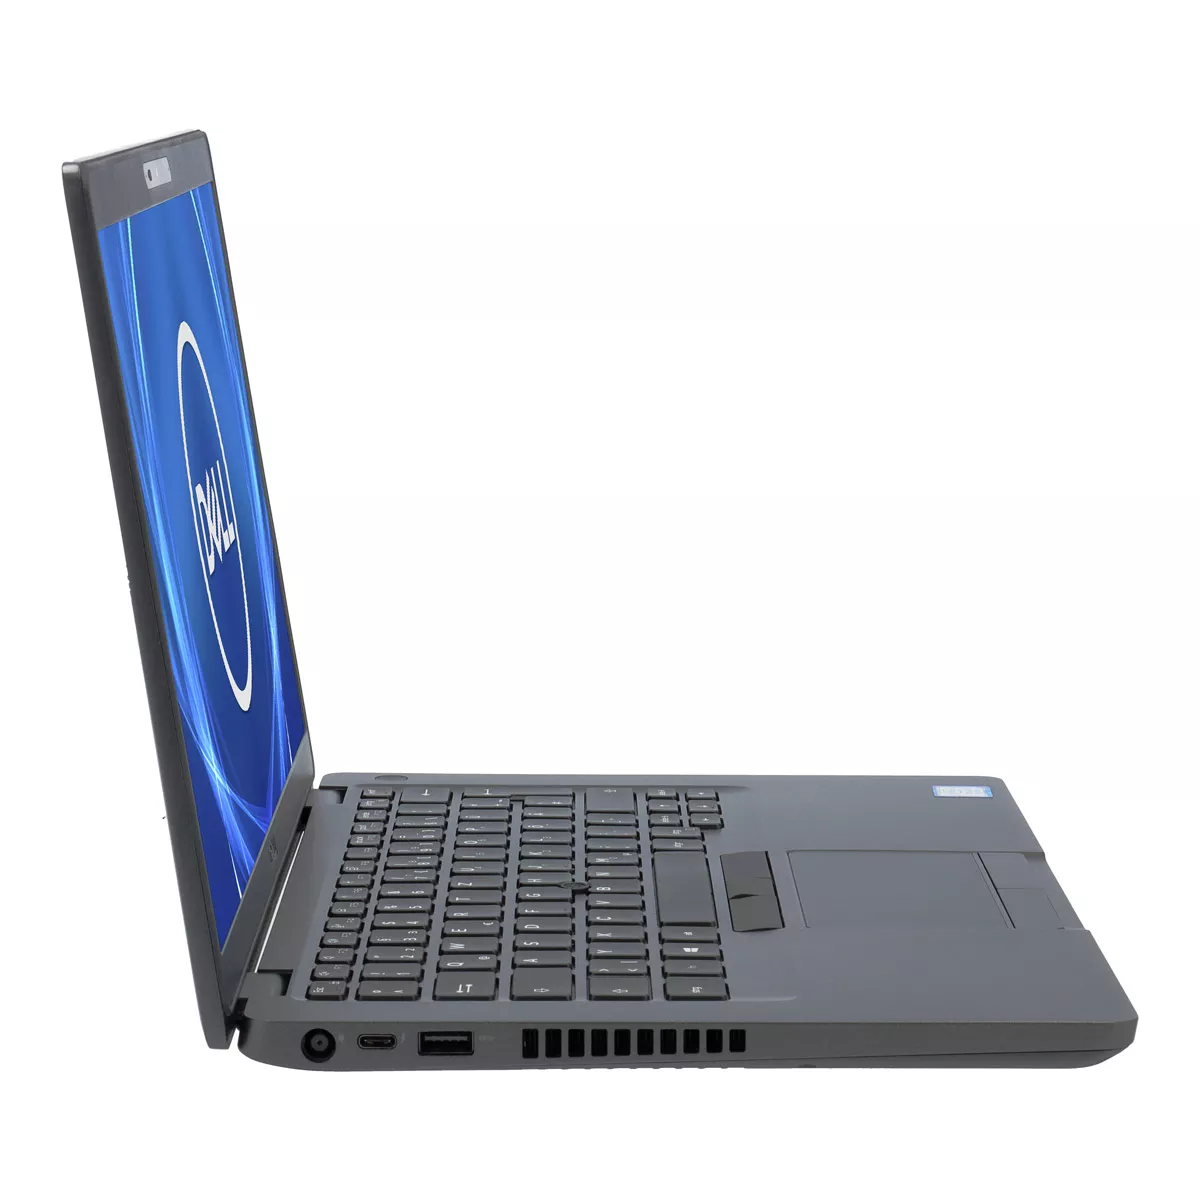 Dell Latitude 5400 Core i5 8265U AMD Radeon 540X Full-HD 240 GB M.2 SSD Webcam Touch A